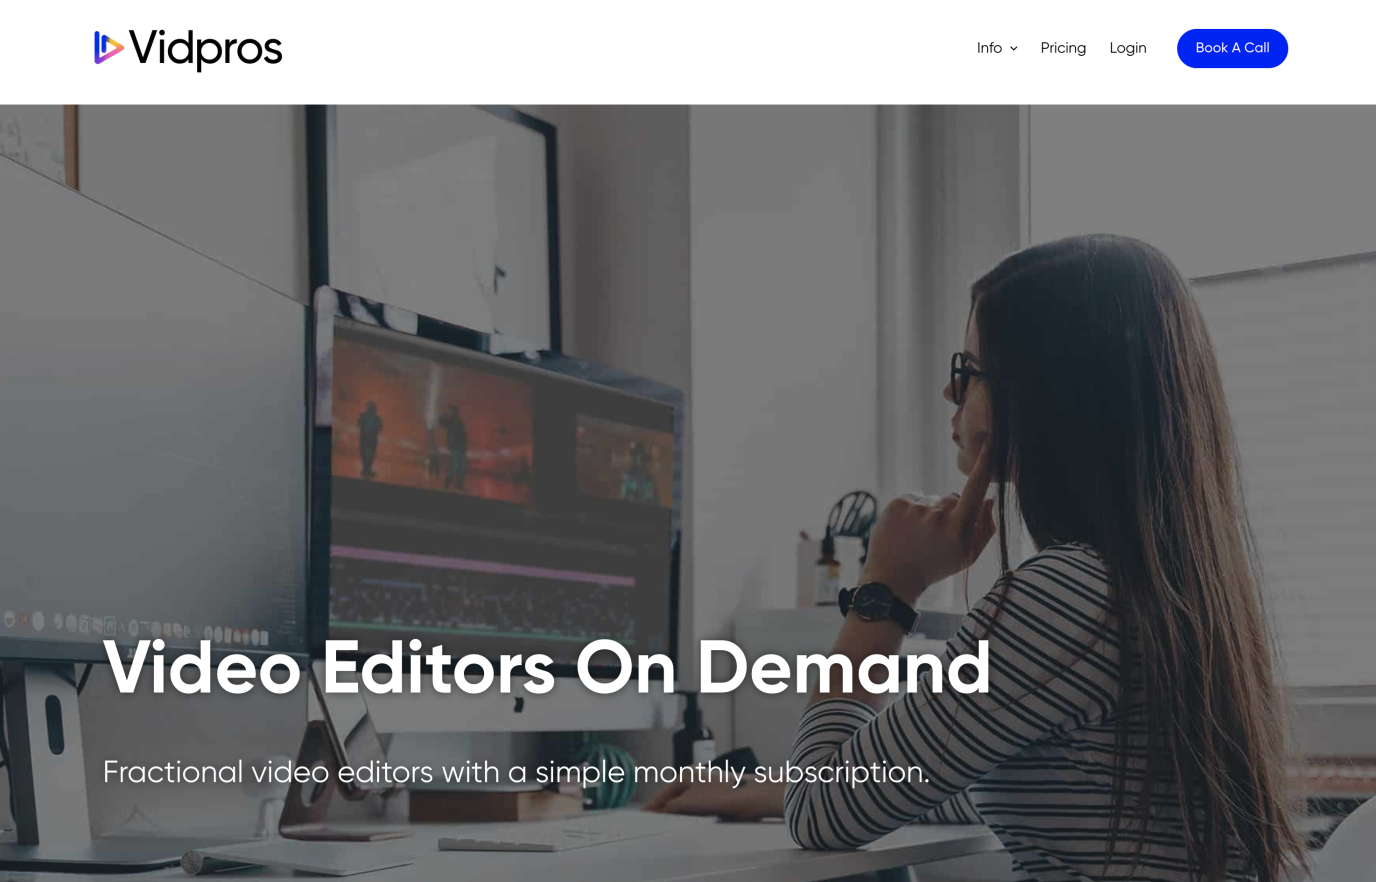 Vidpros video editing subscription service